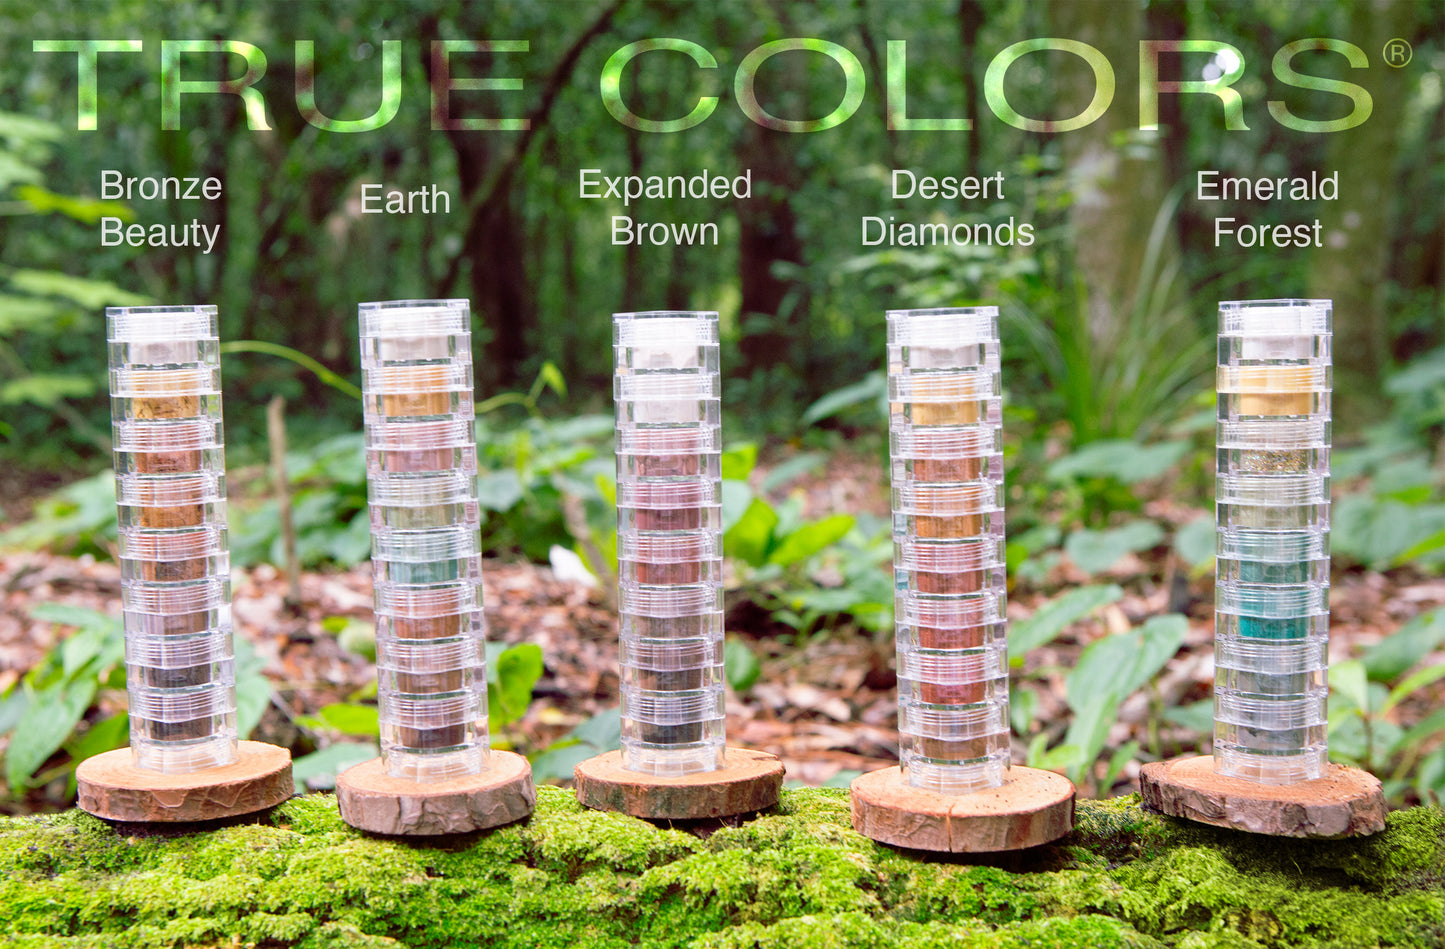 True Colors Mineral Makeup Earth Five Stacks